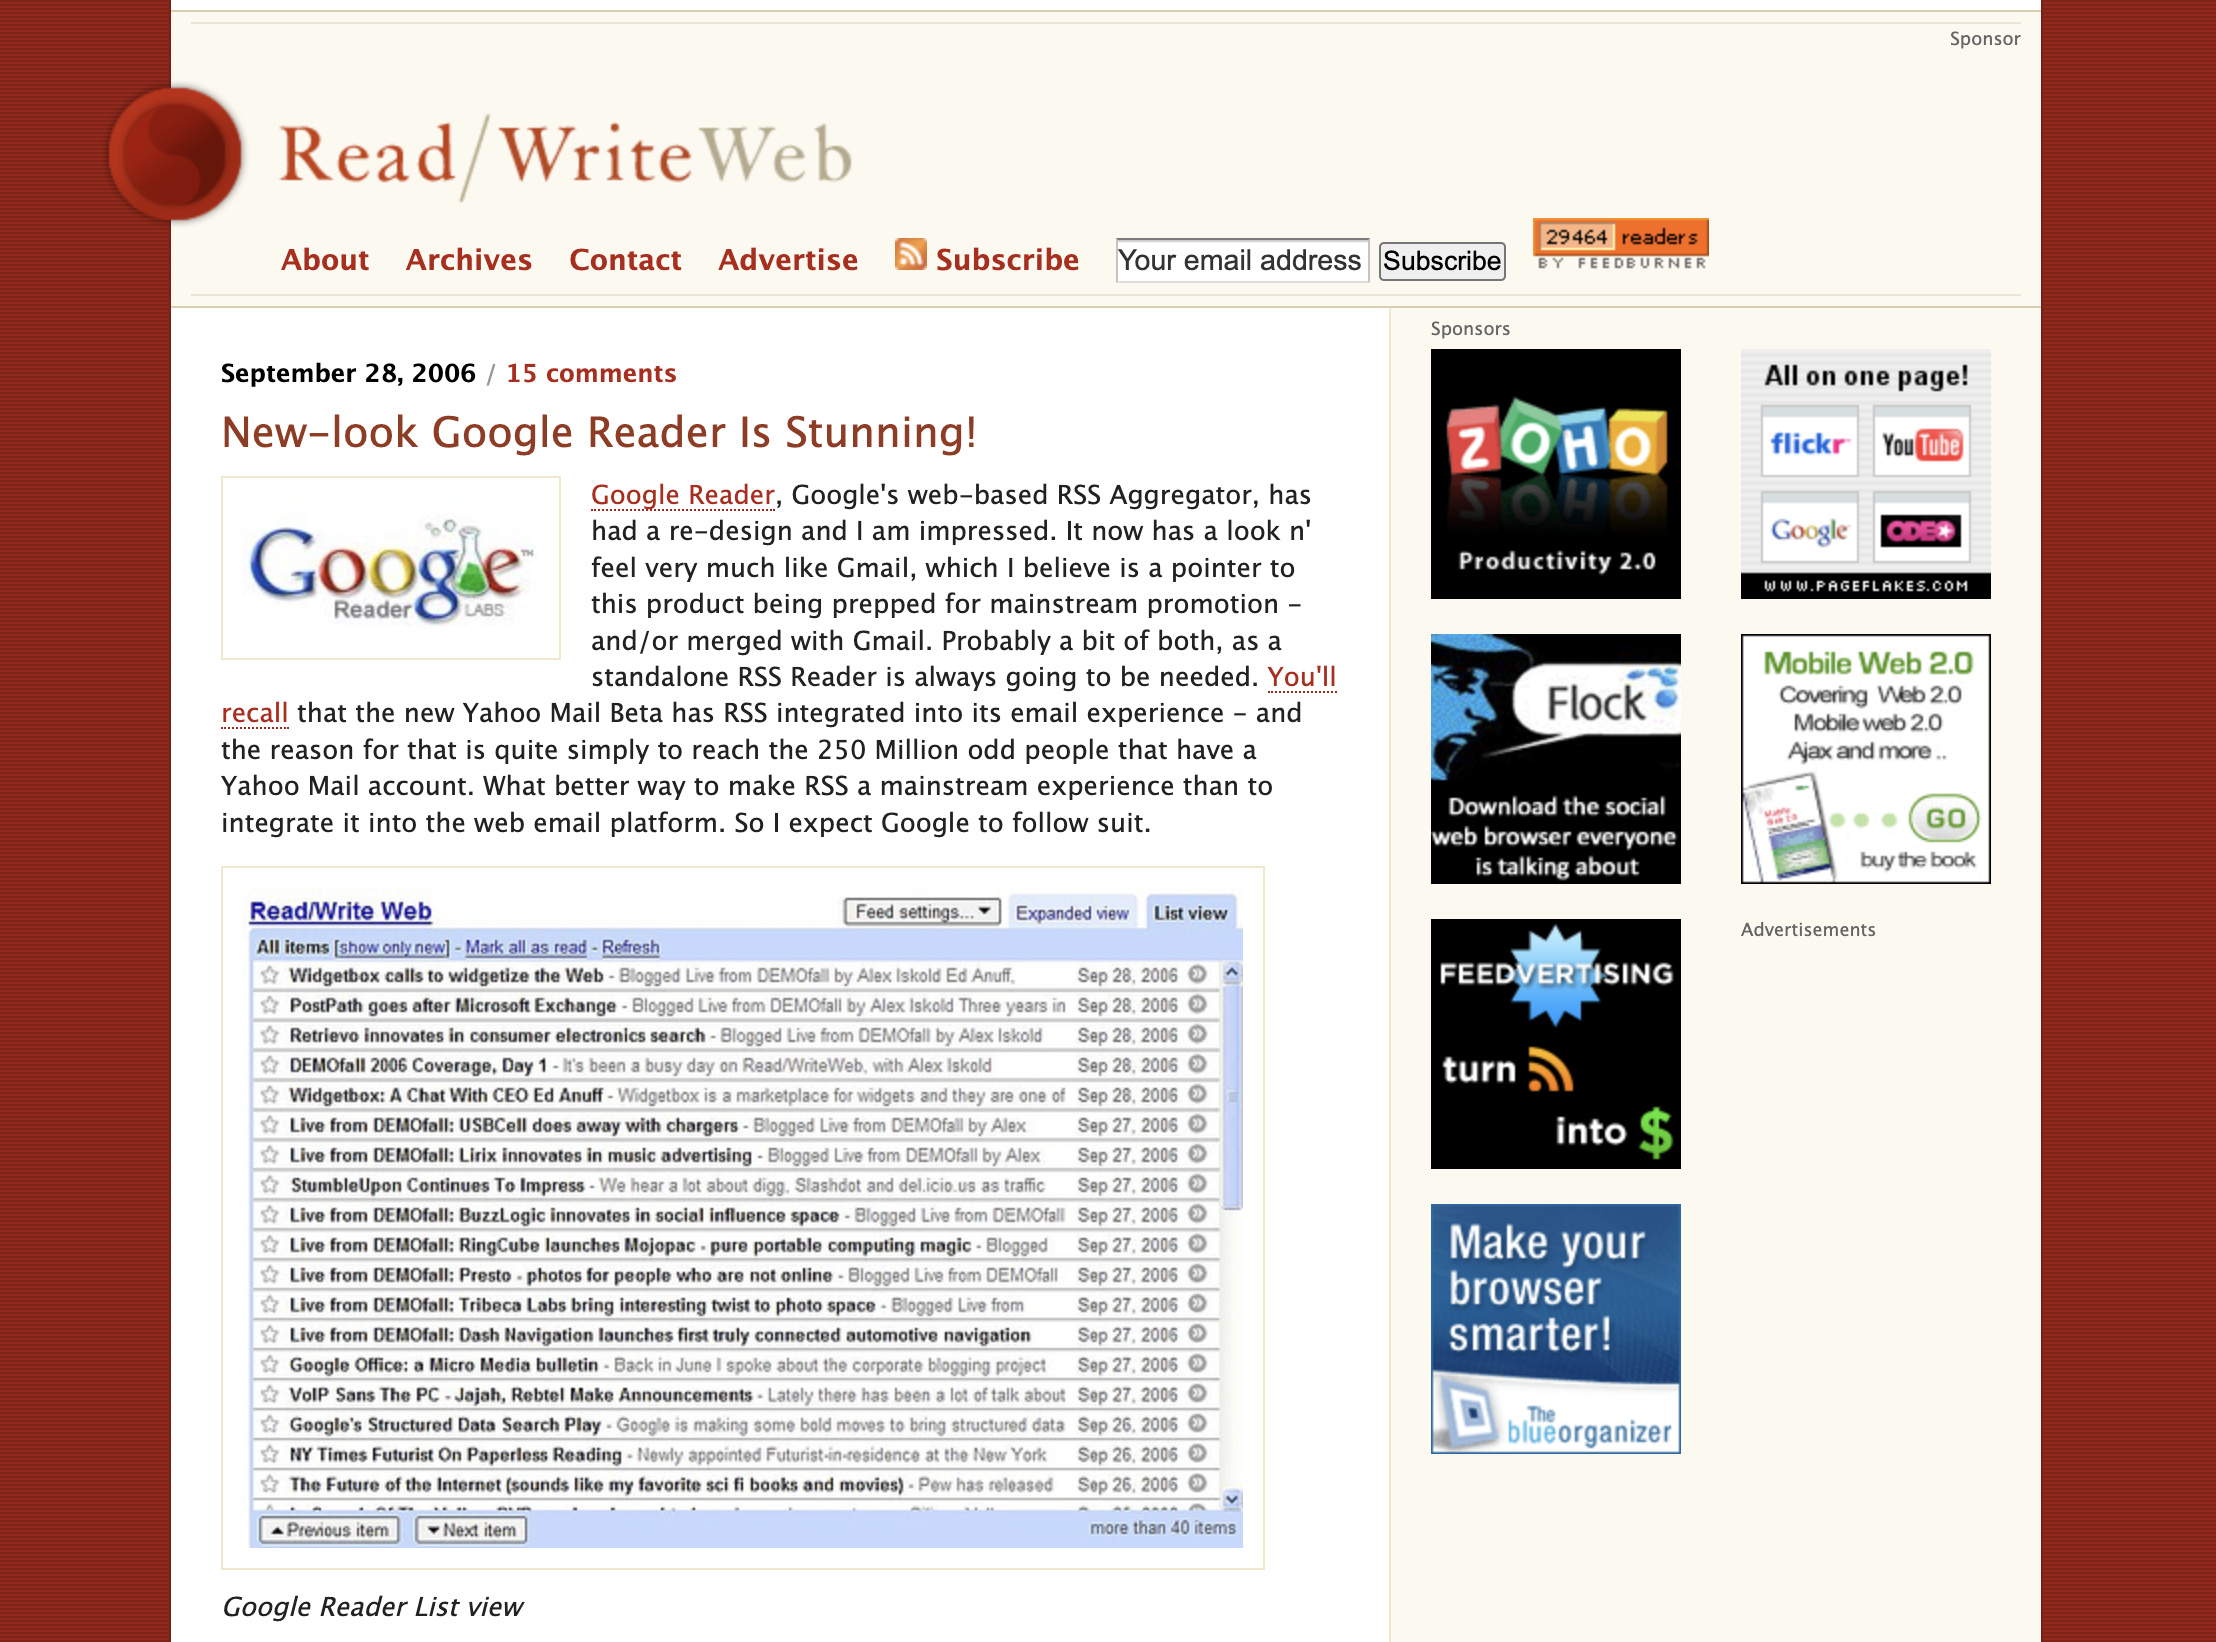 Google Reader redesign, September 2006